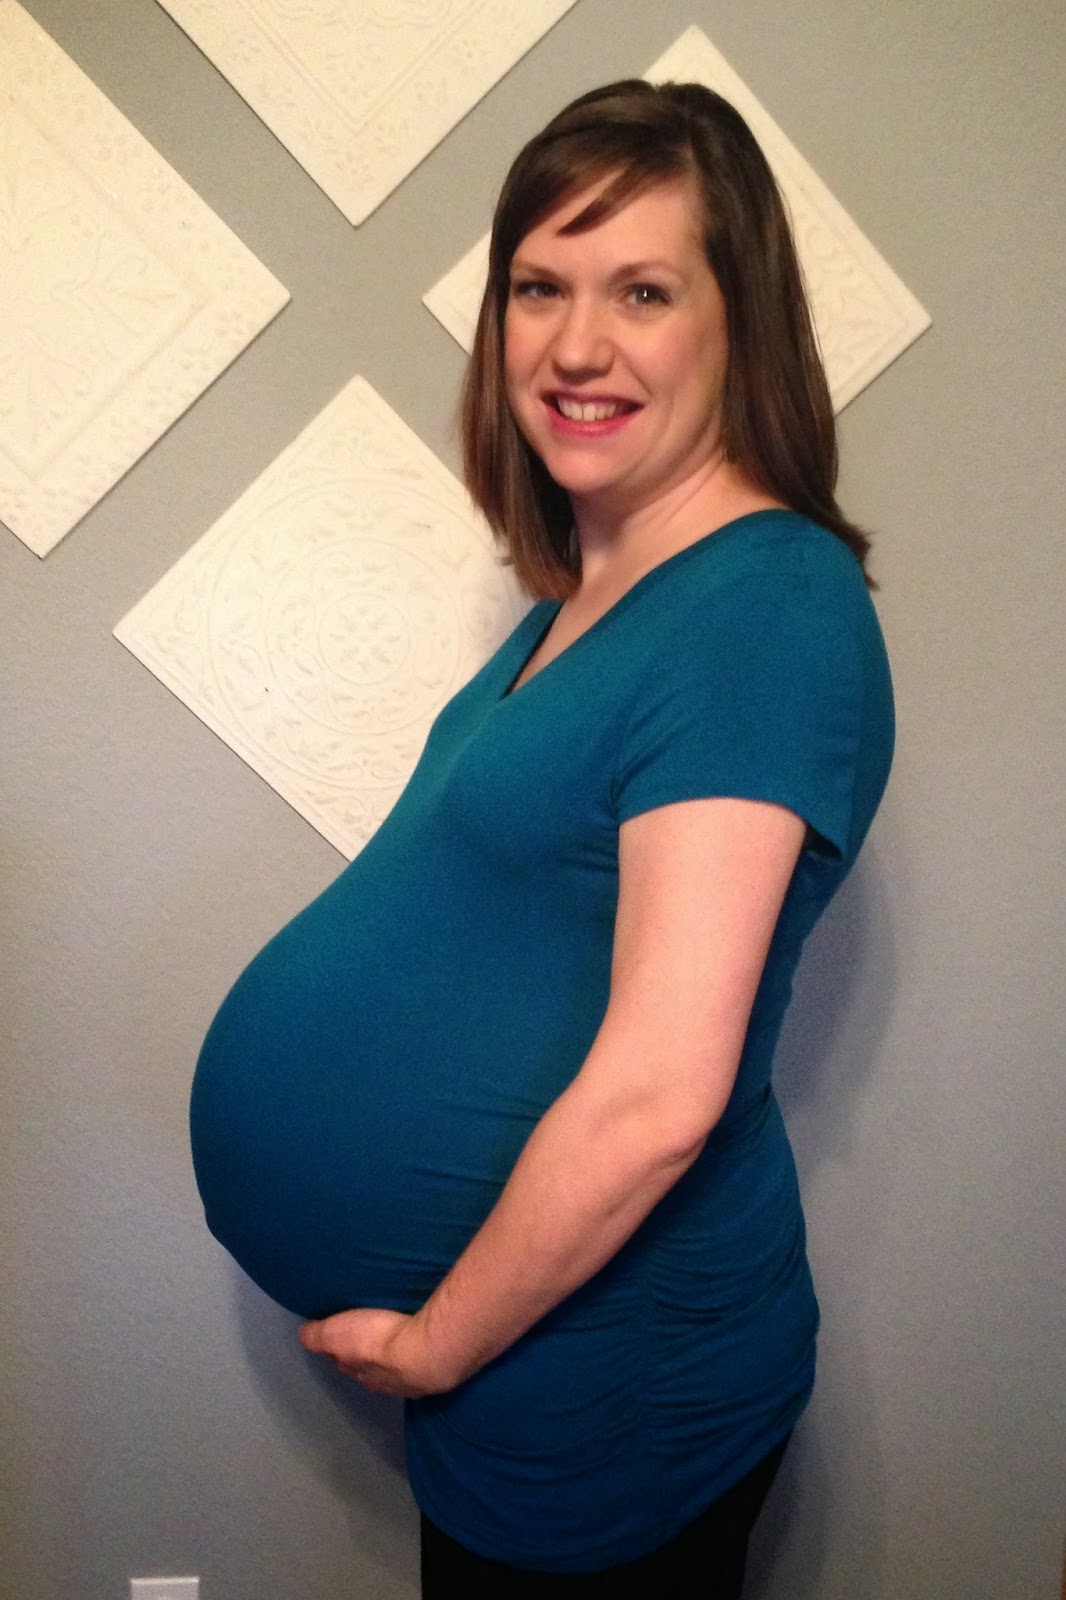 38 Weeks 5 Days Pregnant Baby Development